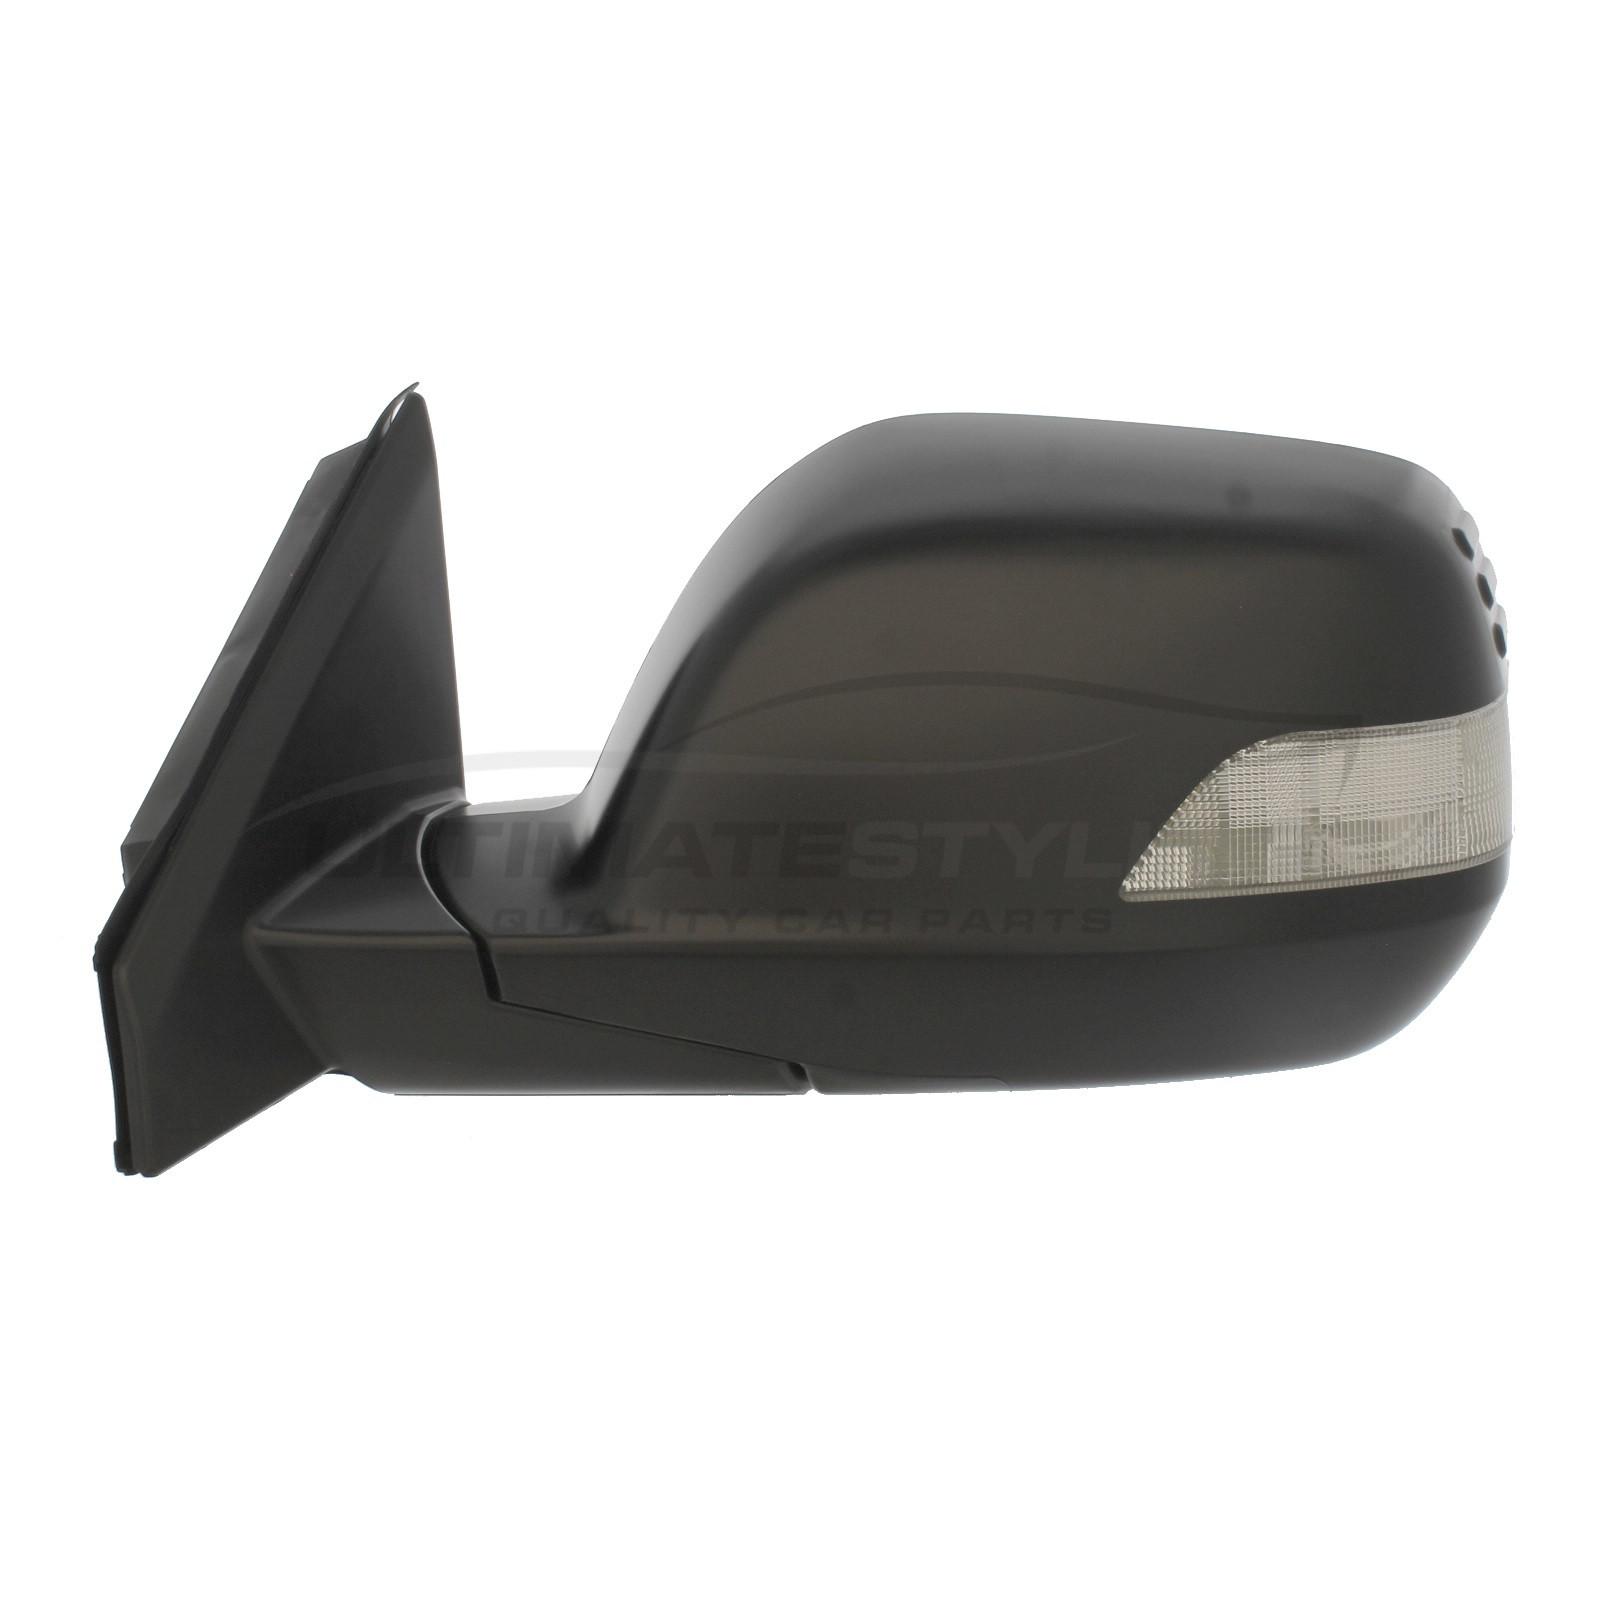 Honda CR-V Wing Mirror / Door Mirror - Passenger Side (LH) - Electric adjustment - Heated Glass - Power Folding - Indicator - Paintable - Black